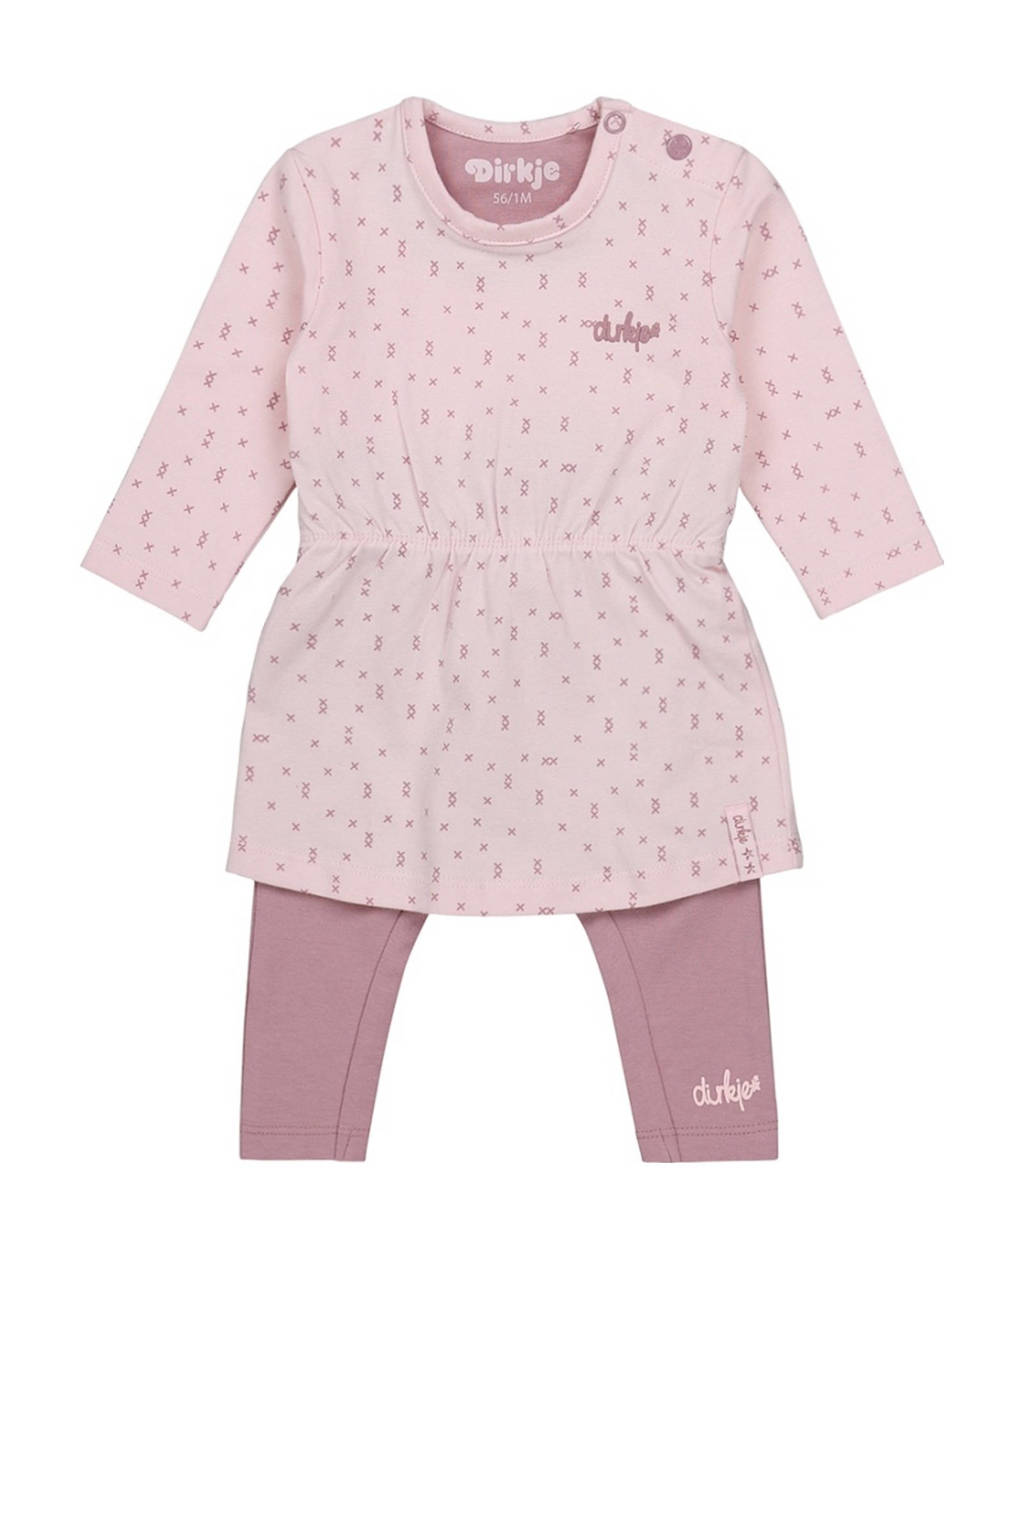 Dirkje baby jurk + legging met biologisch katoen roze/lichtroze, Roze/lichtroze